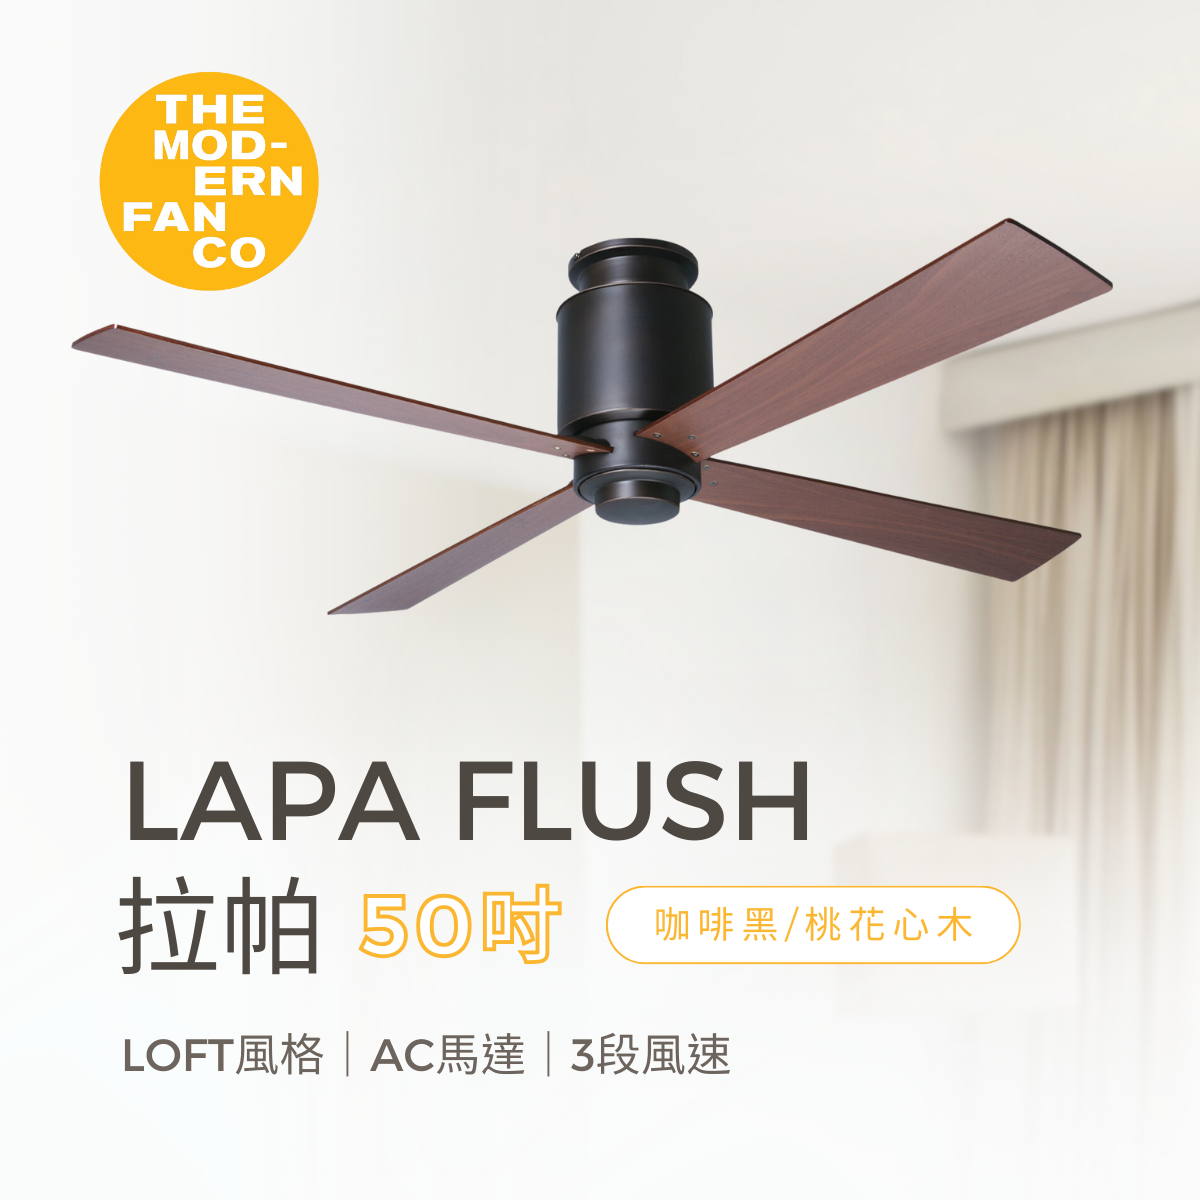 MFC商品詳情頁產品圖模板-Lapa Flush.png